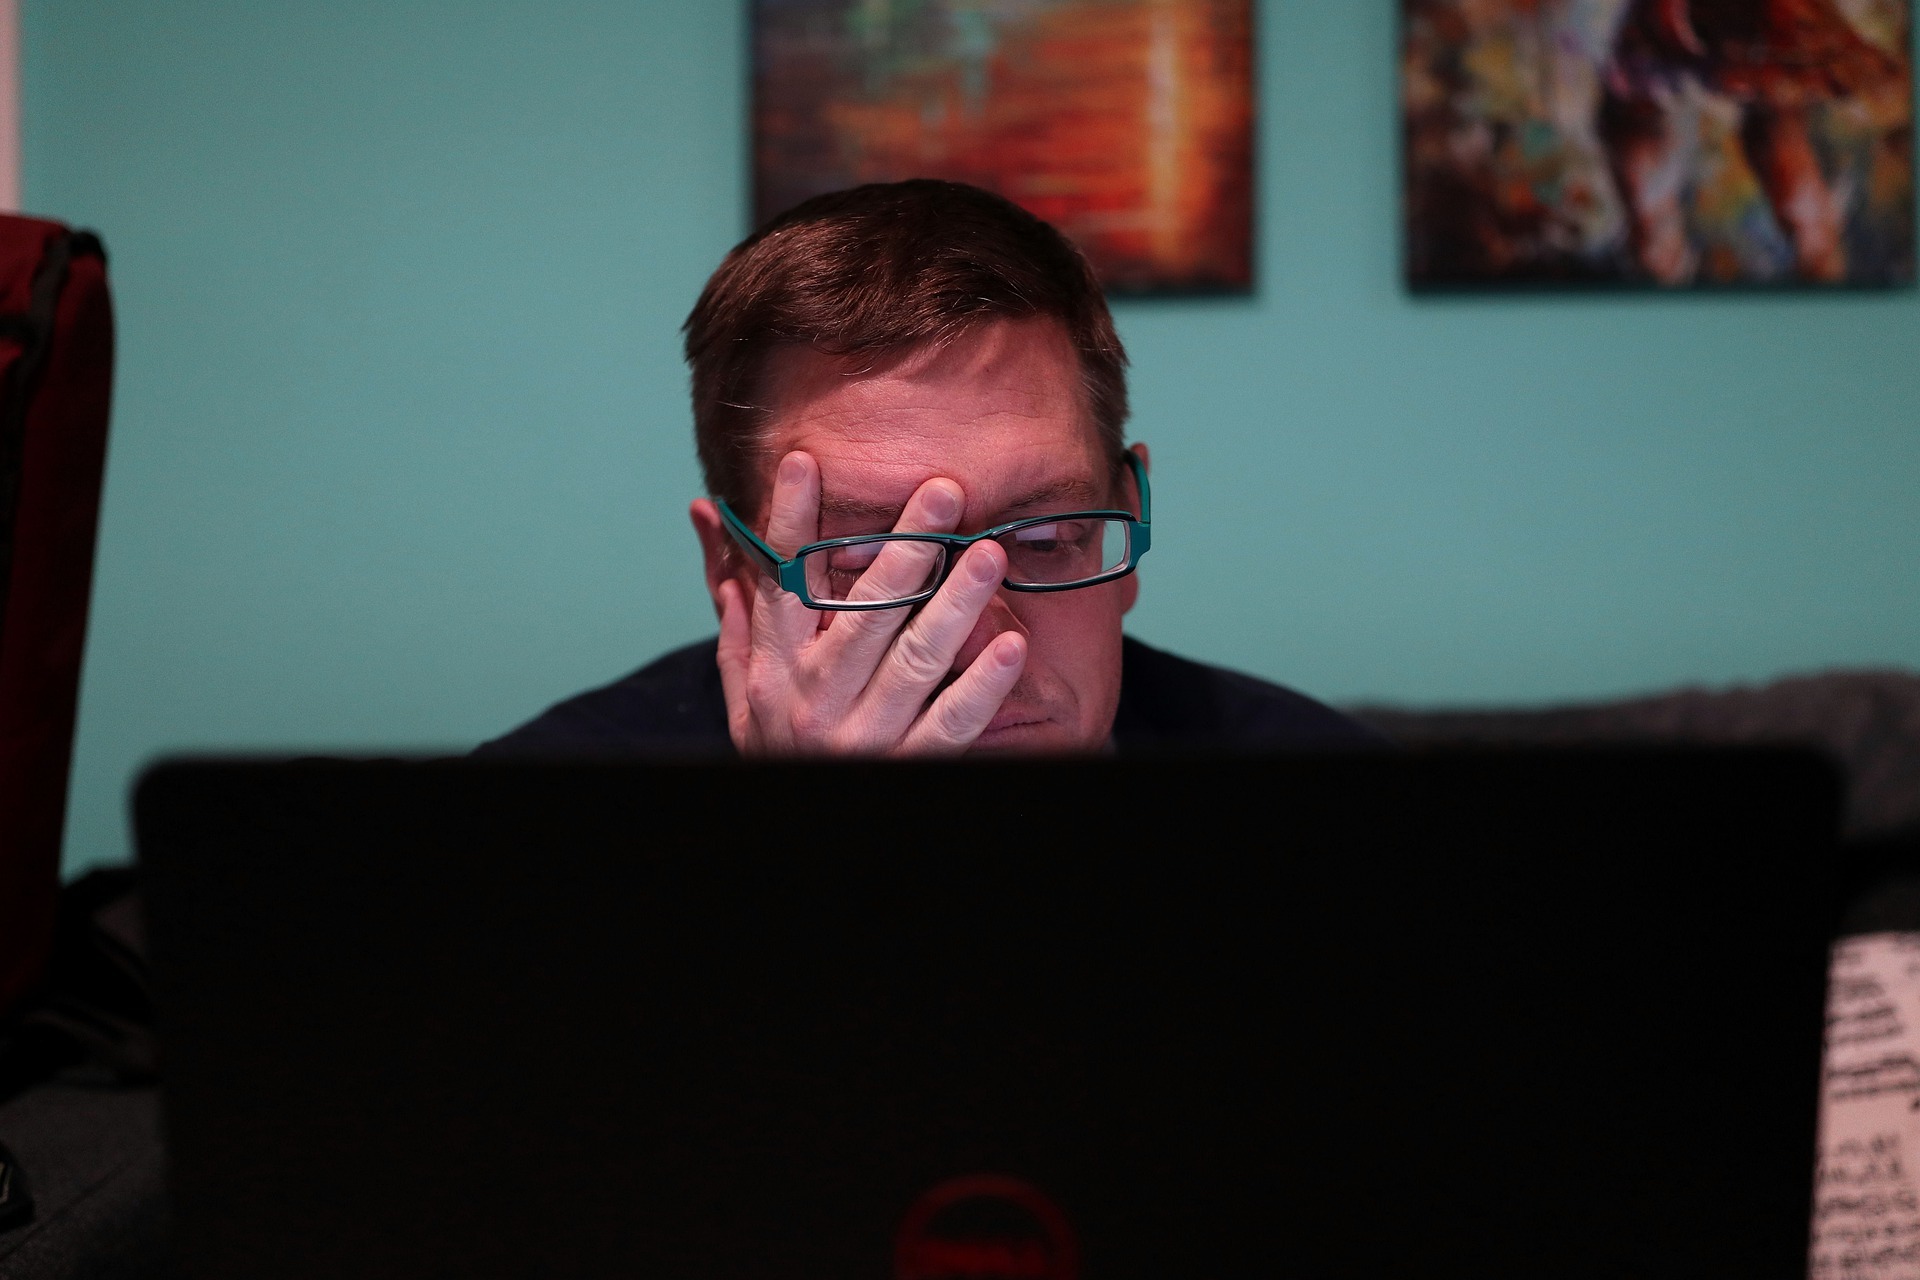 tired man facing the laptop screen